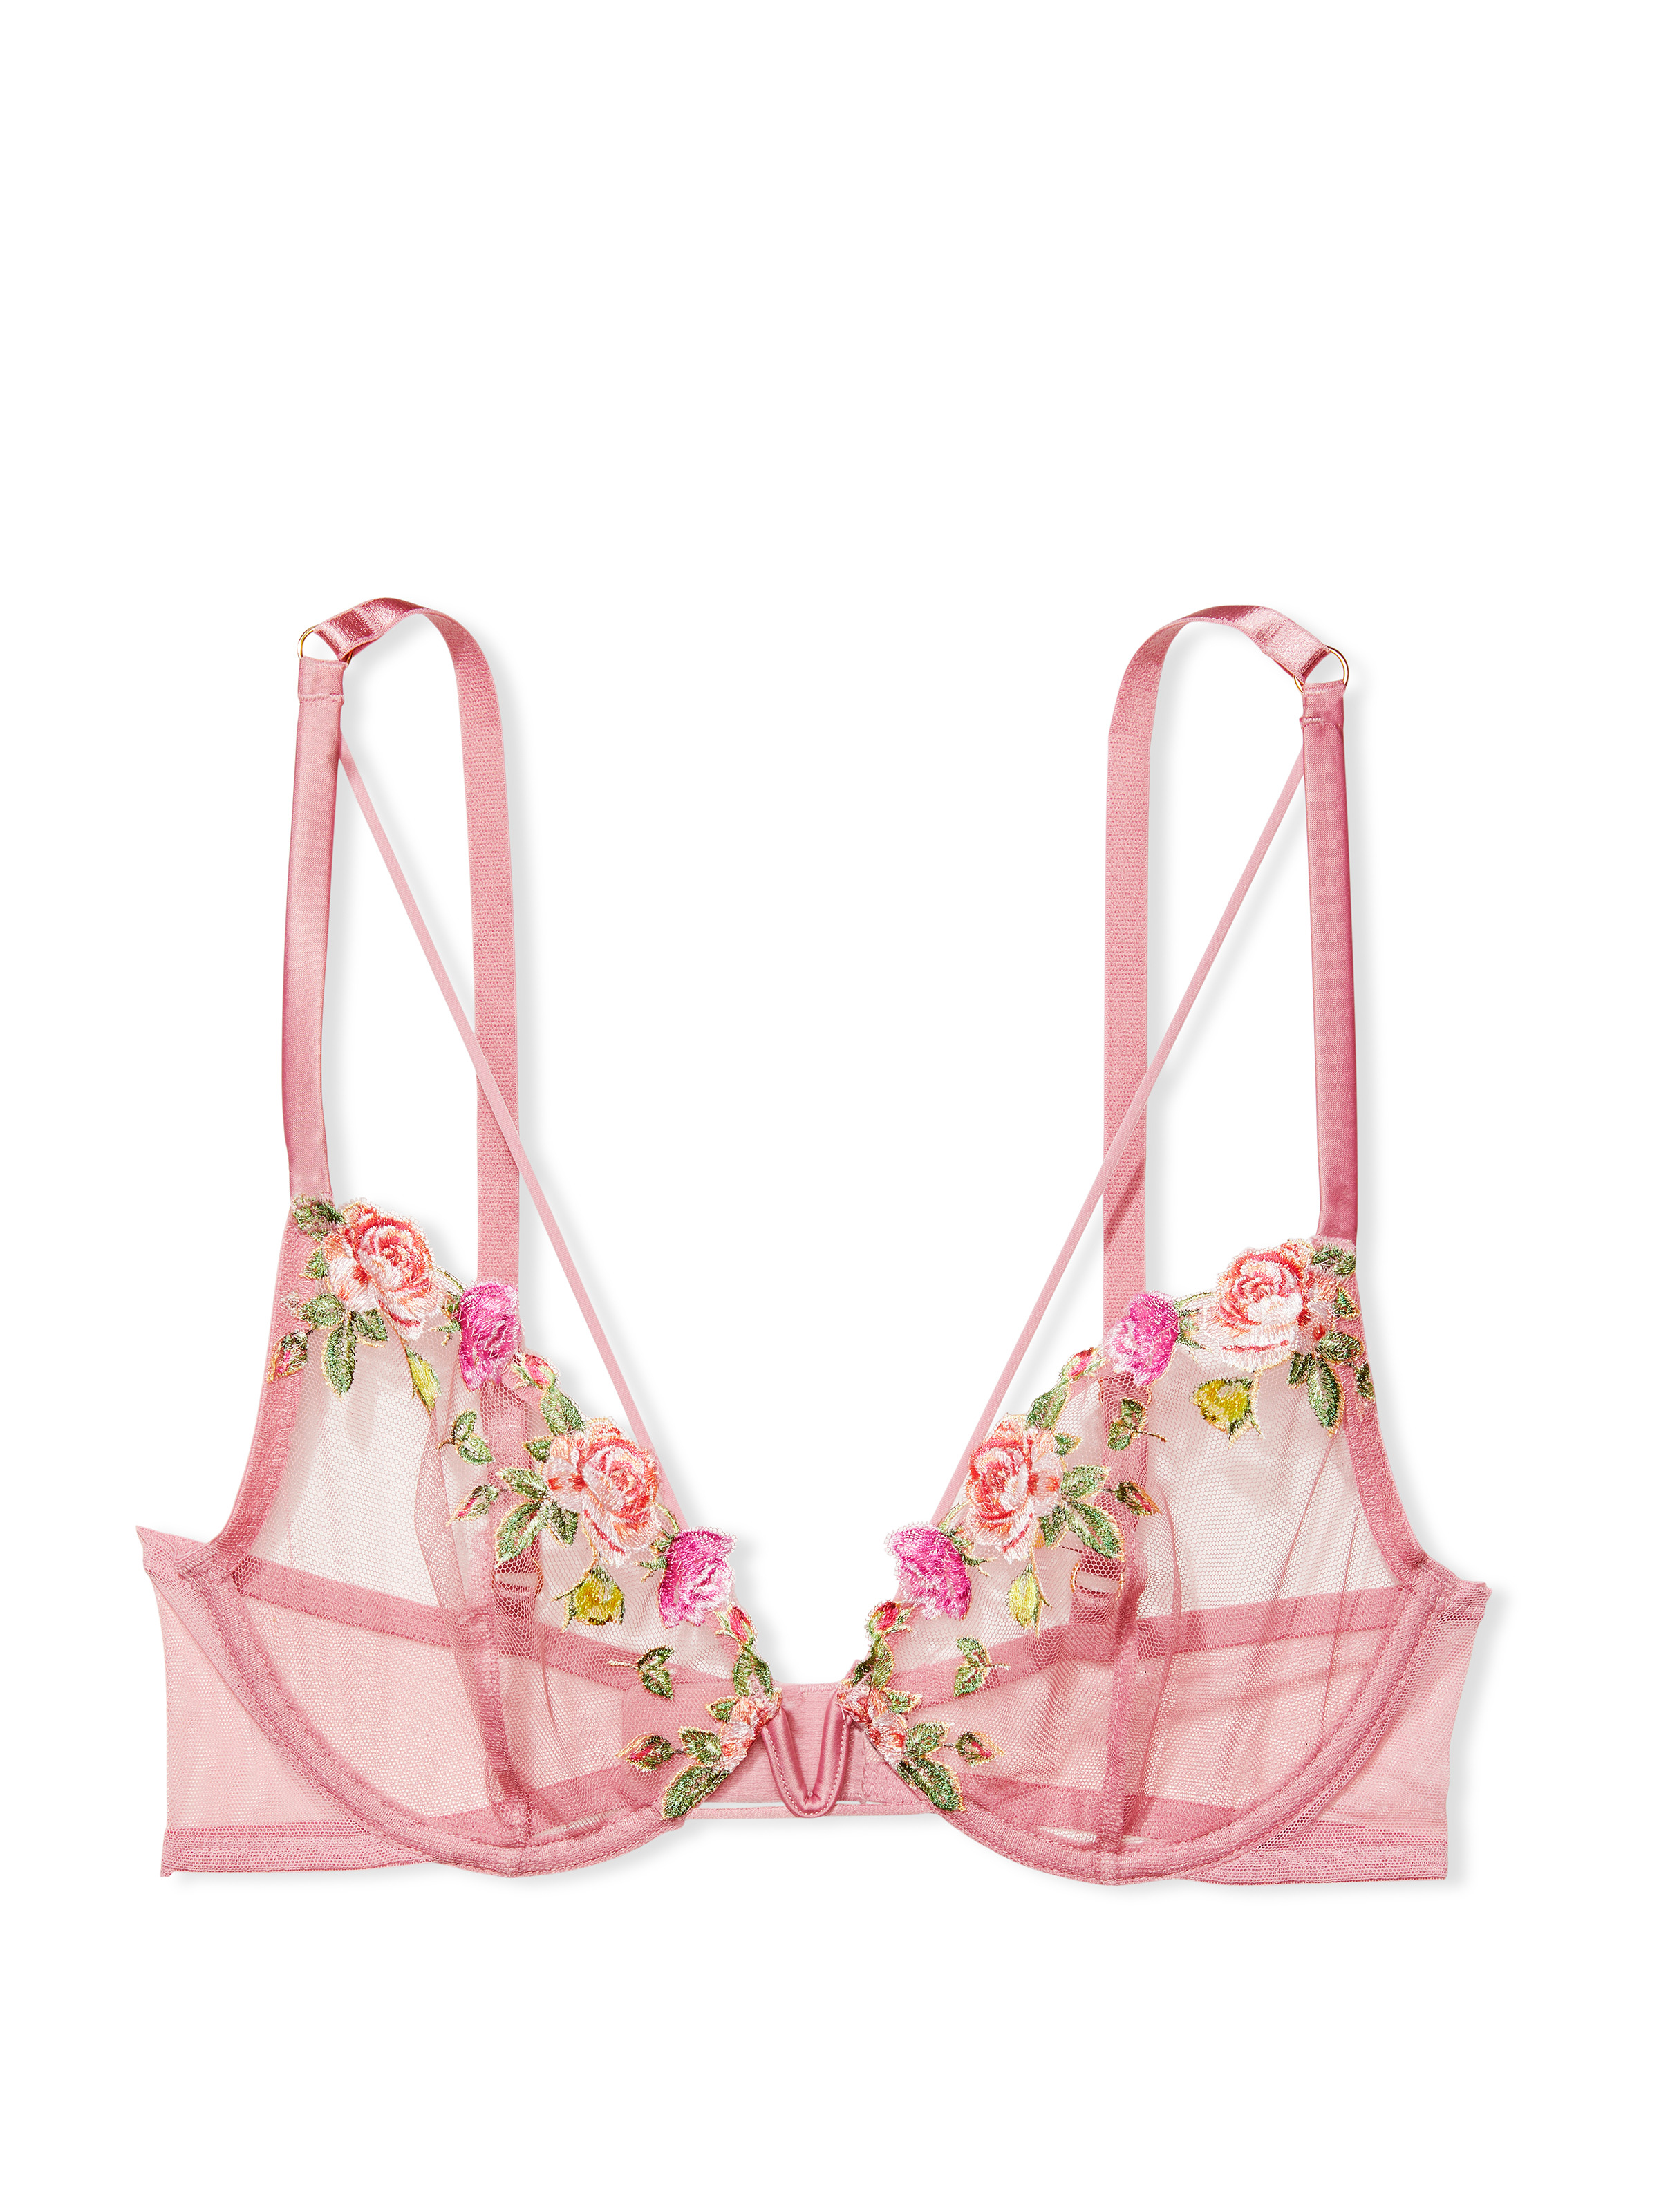 Victoria's Secret VS Very sexy unlined plunge bra Pink Size 32 E